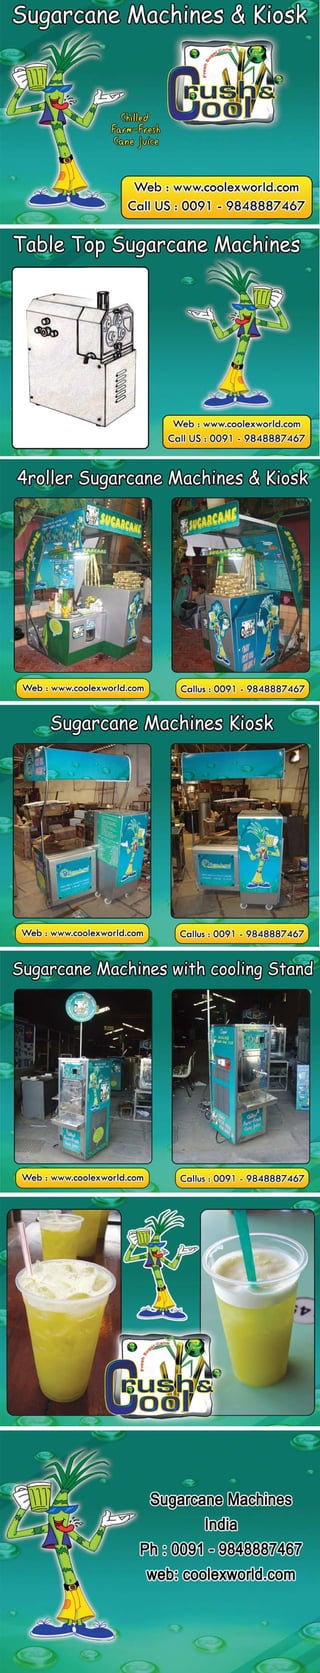 Cane juicer machine suppliers india